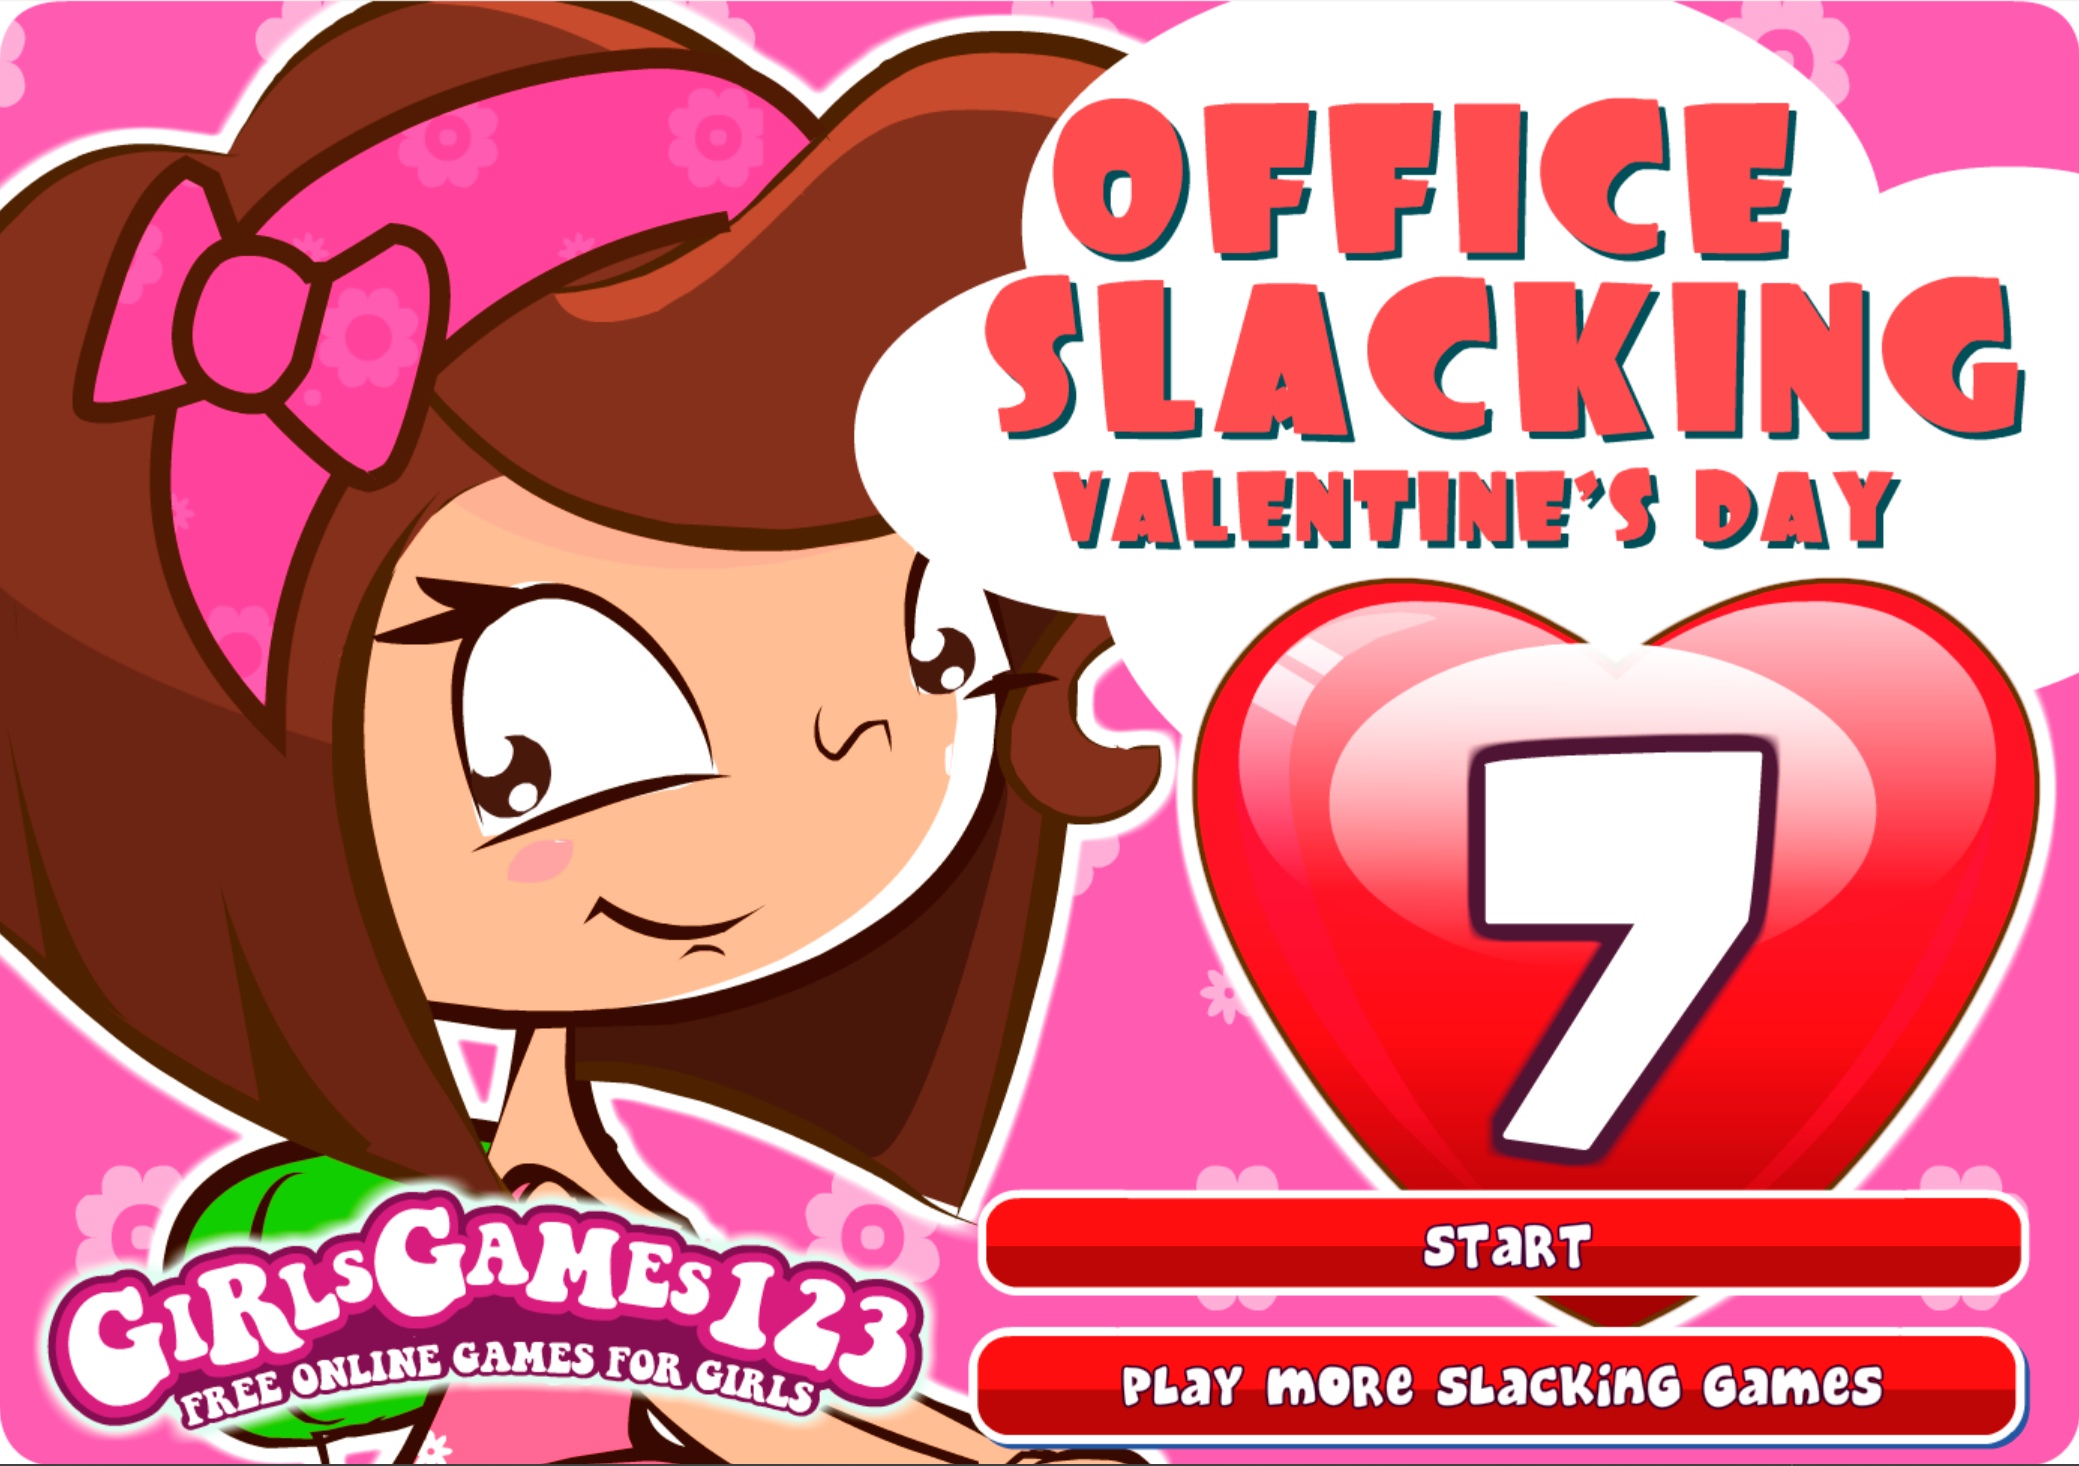 Office Slacking 7: Valentine's Day